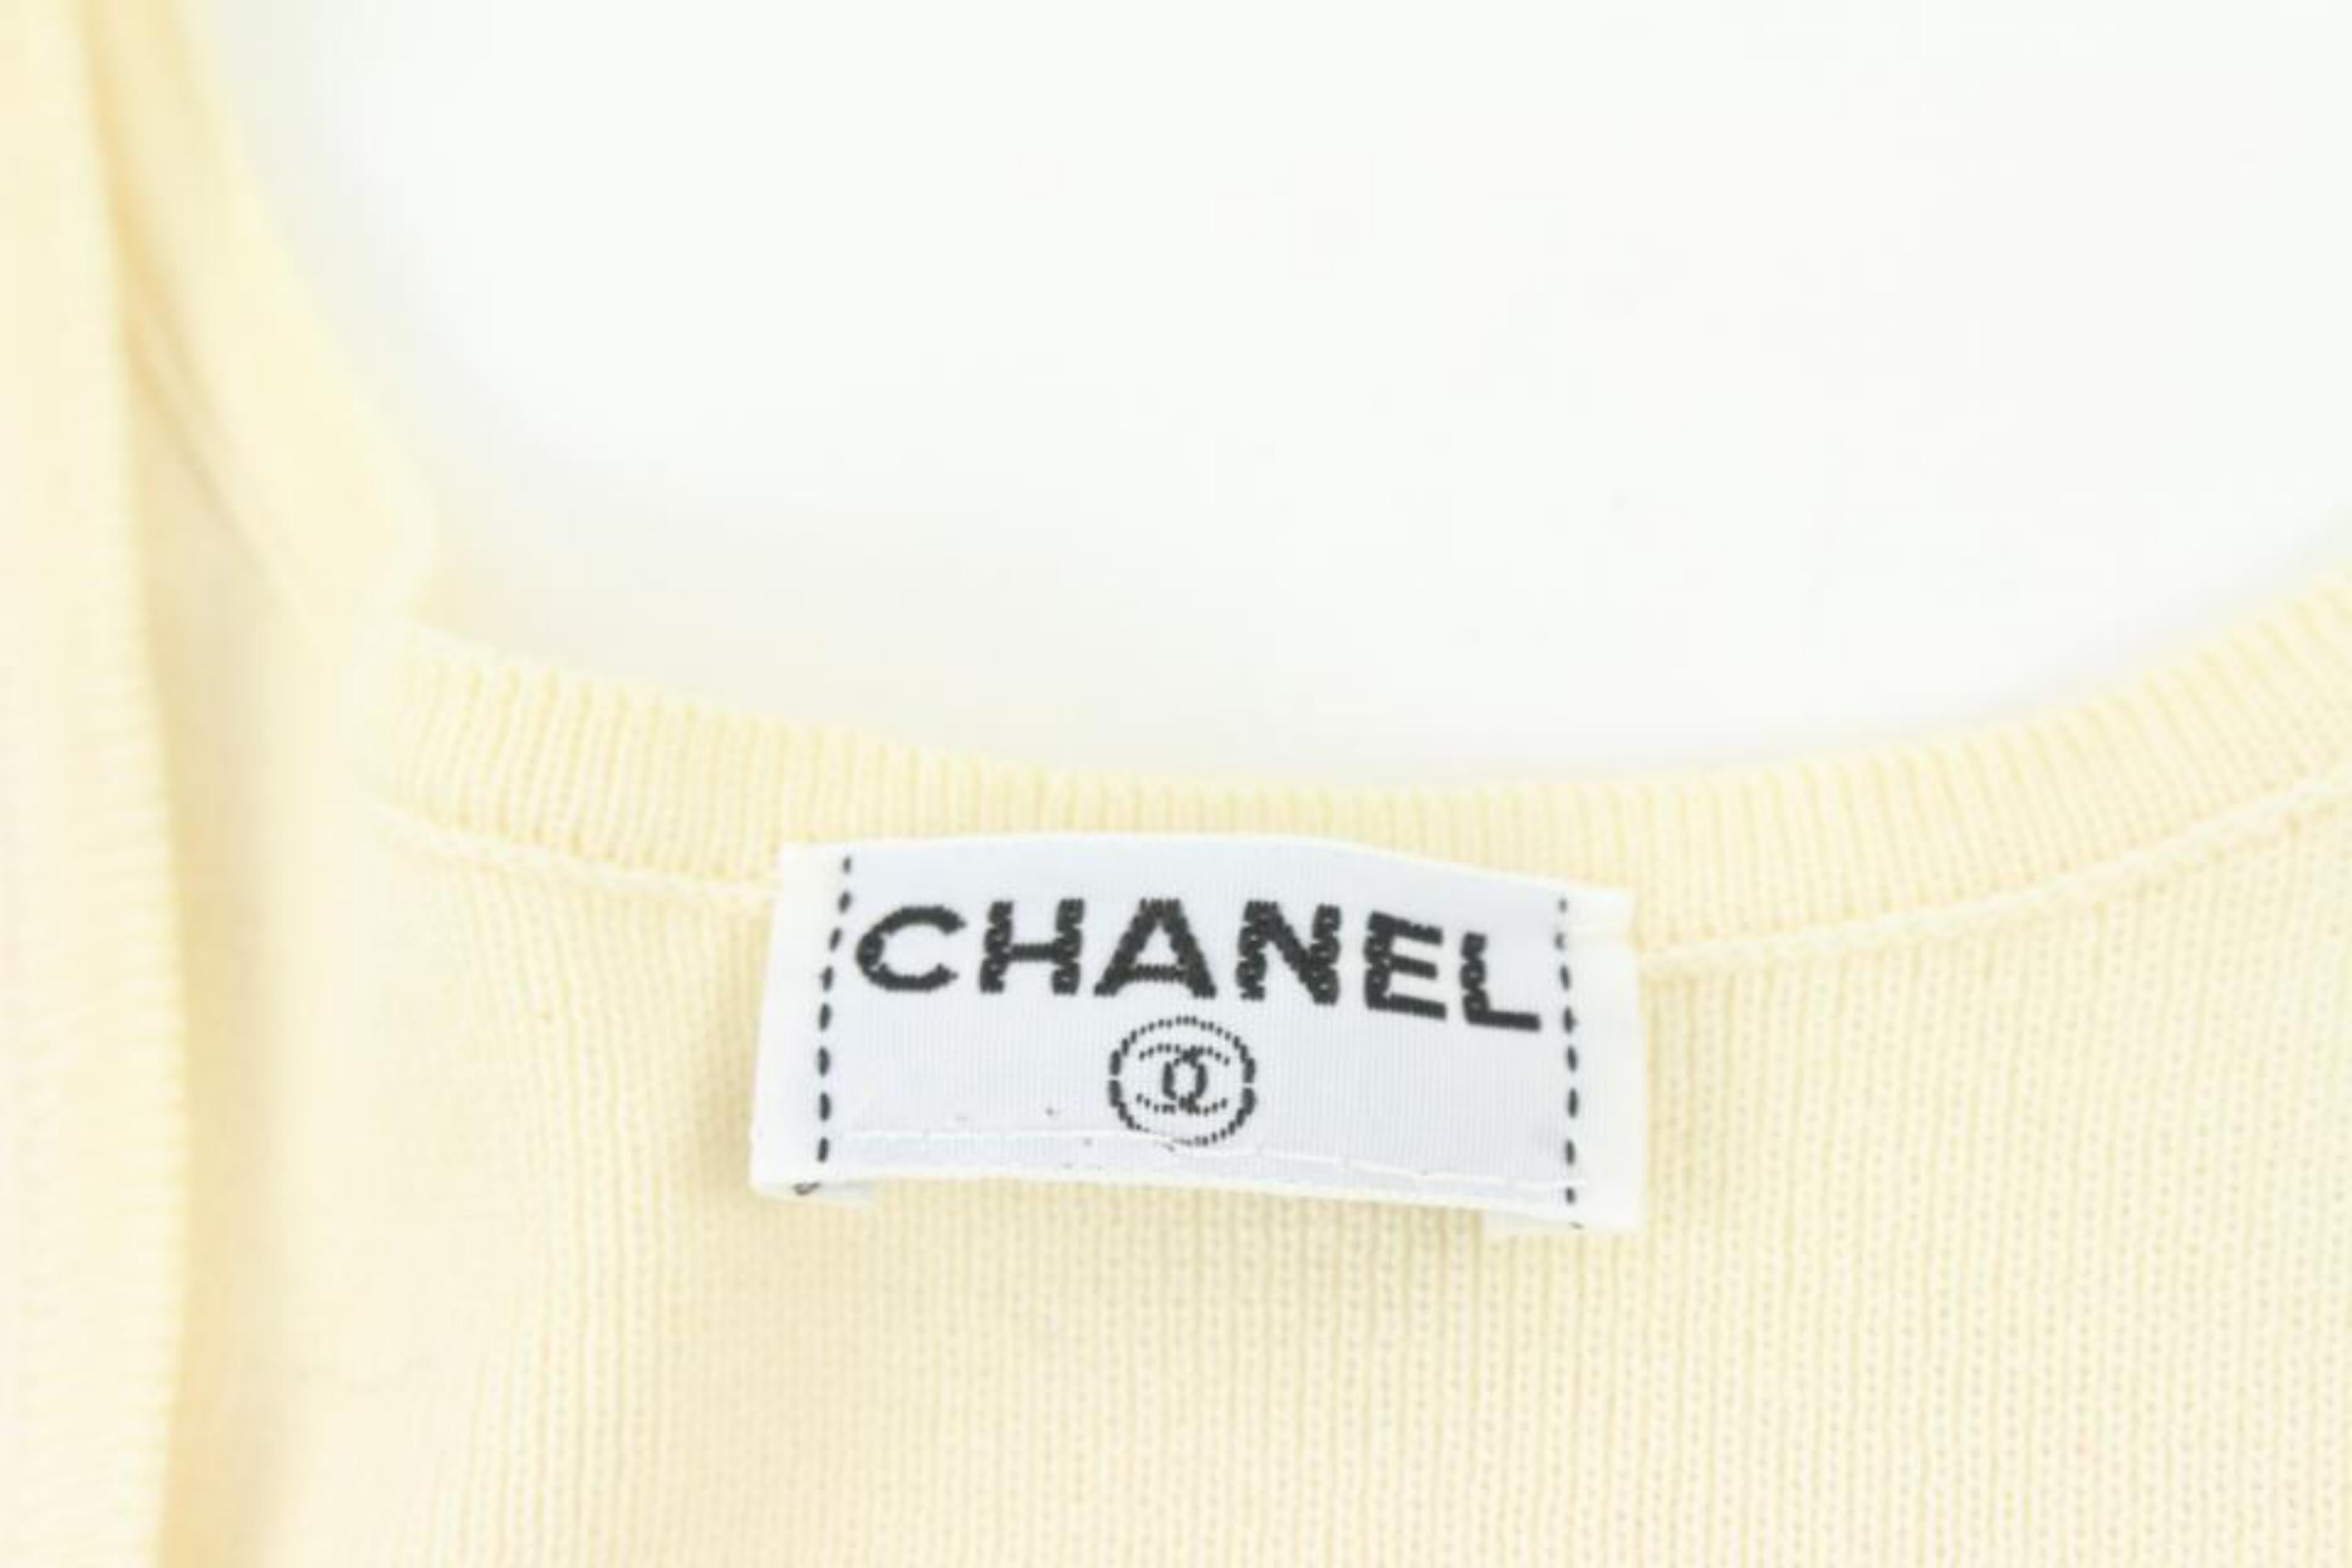 chanel f1 shirt price